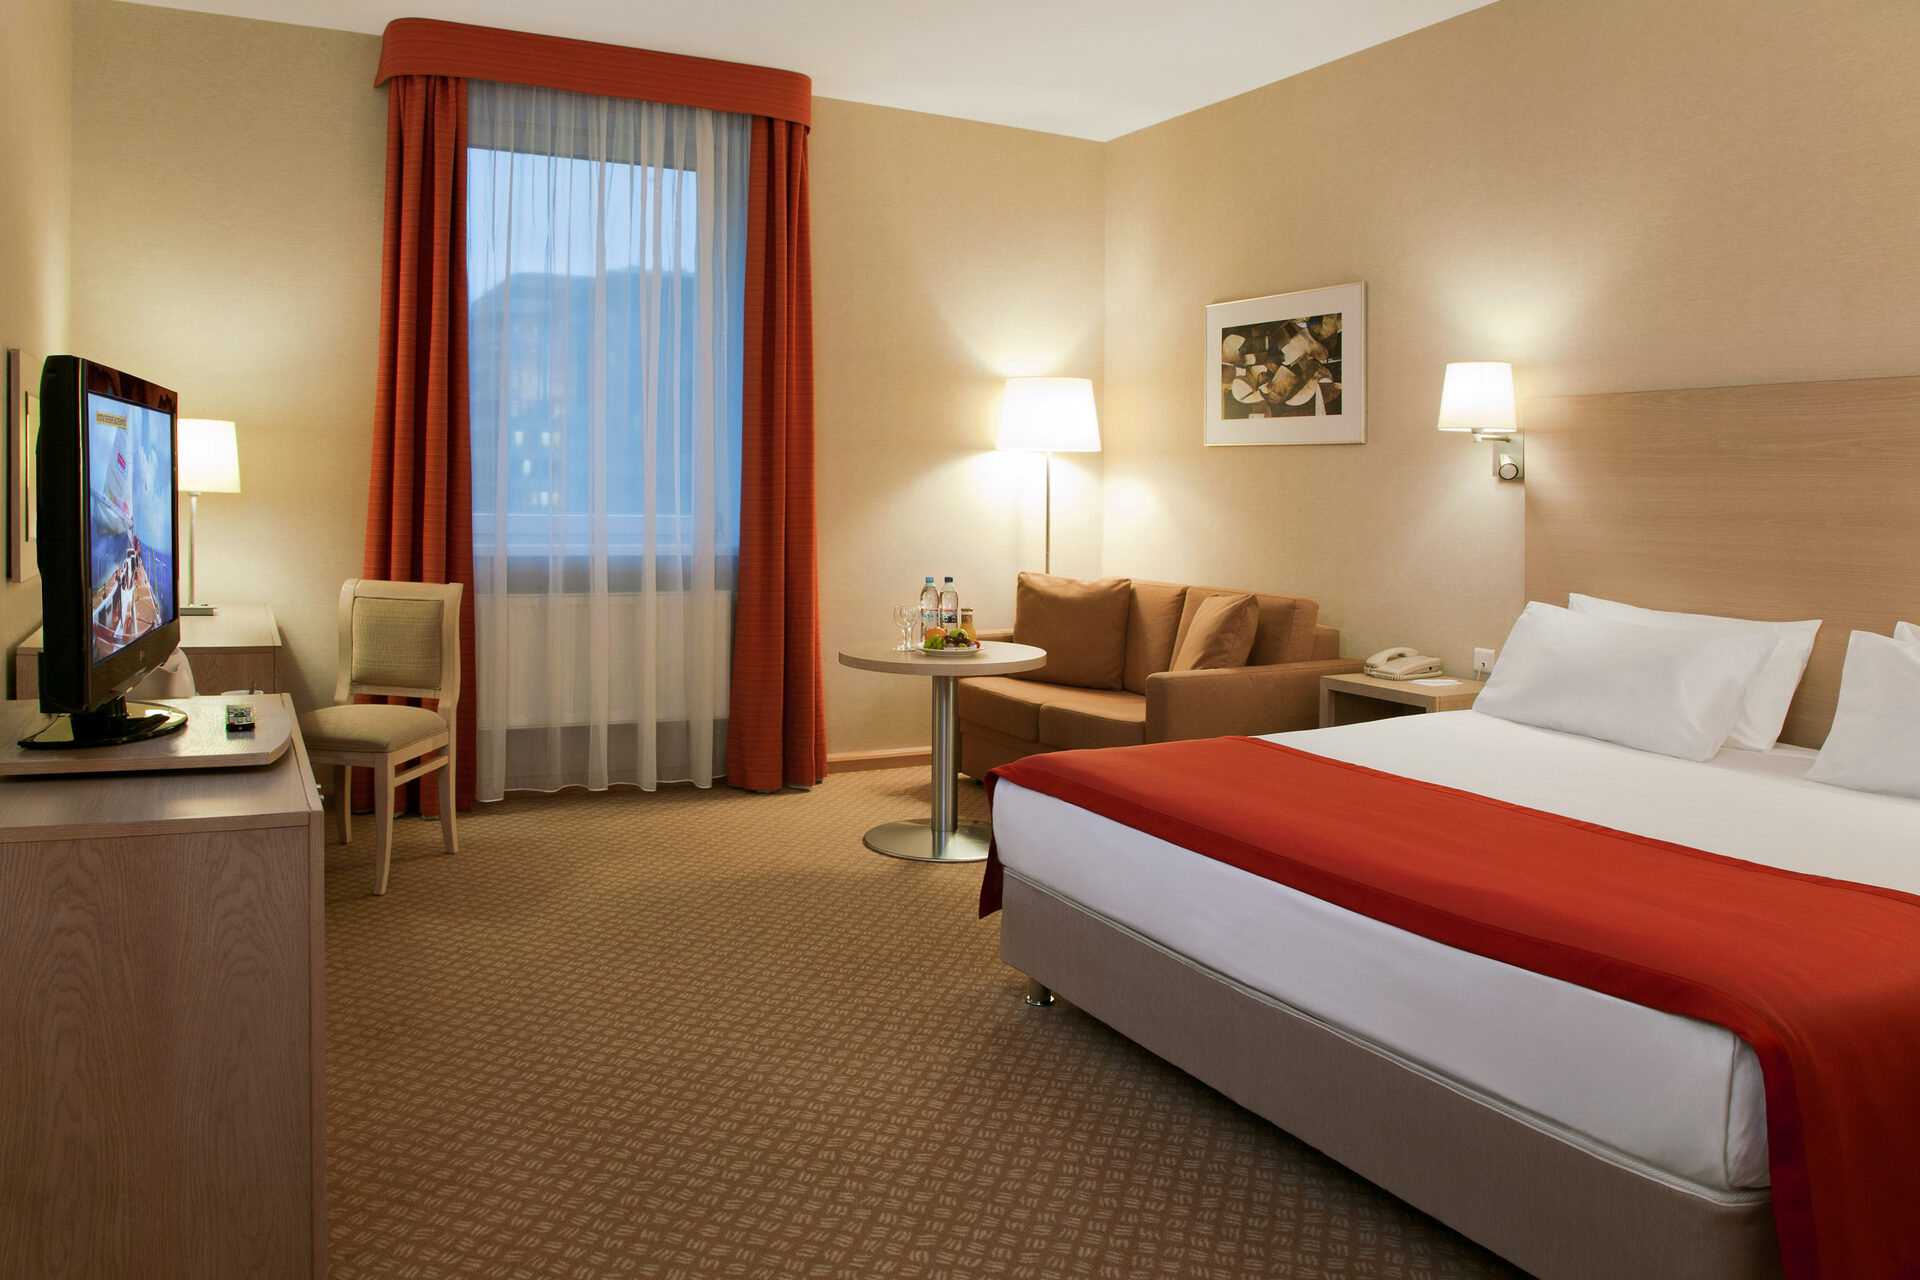 Holiday Inn Lesnaya Hotel: Room